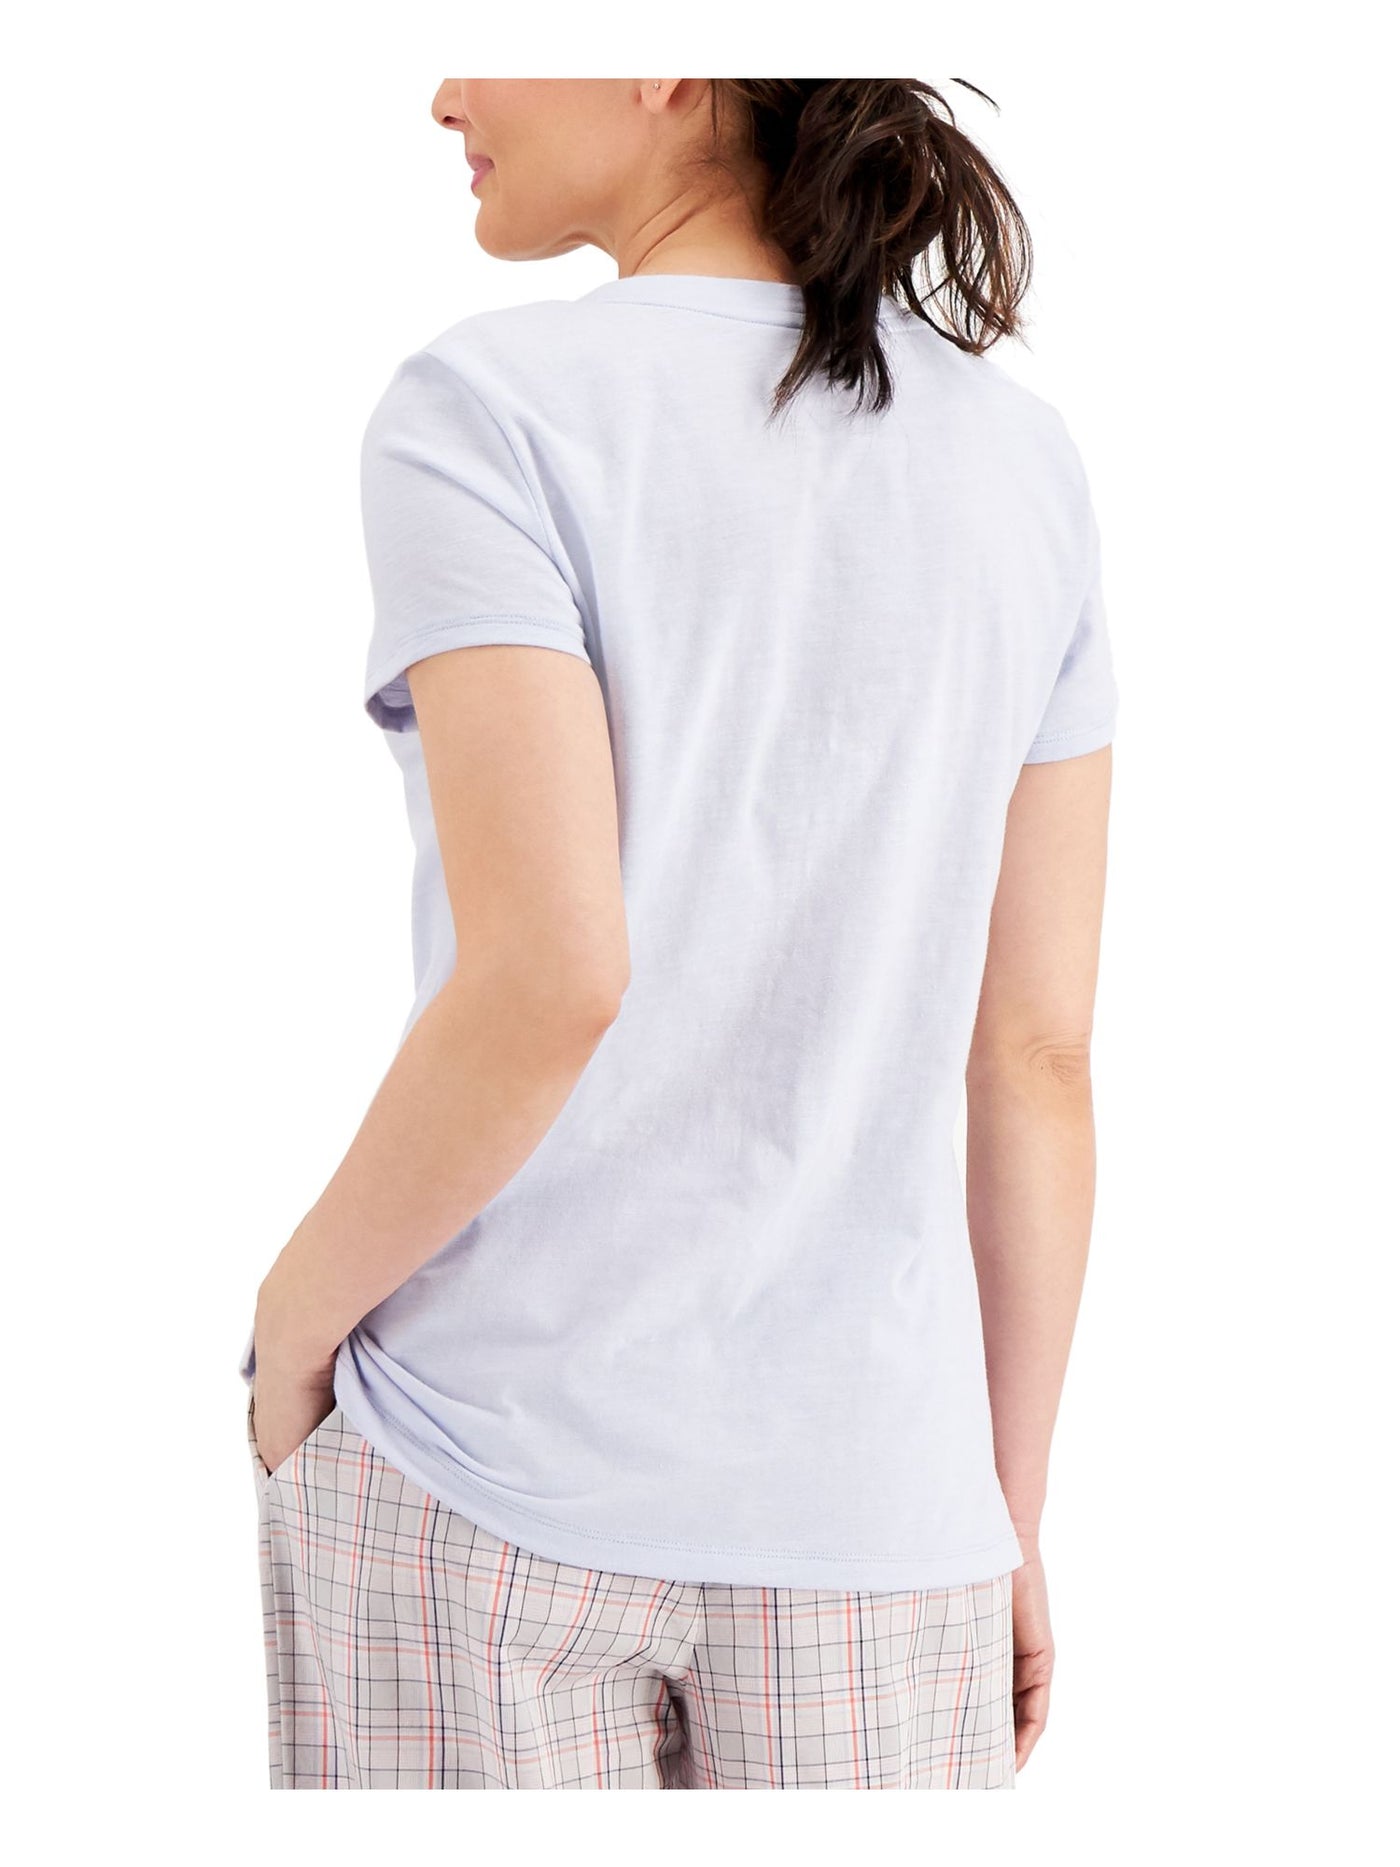 CHARTER CLUB Intimates Light Blue Cotton Blend V-Neck Sleepwear Sleep Shirt Pajama Top L